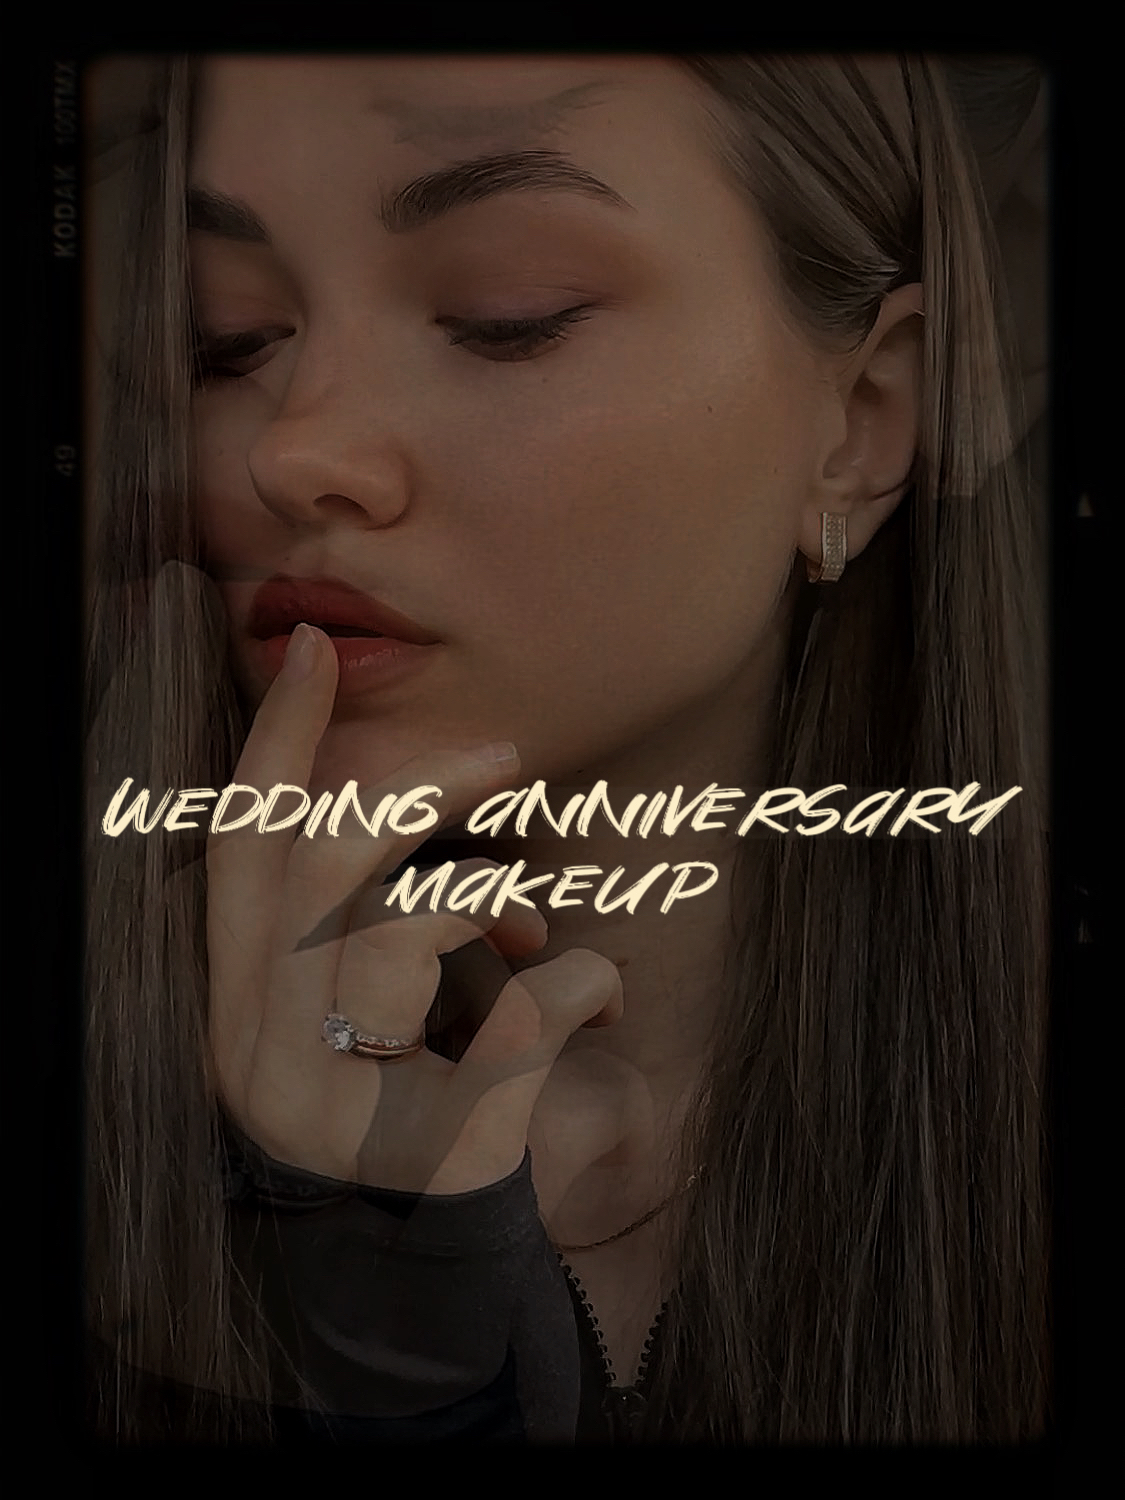 Wedding anniversary makeup